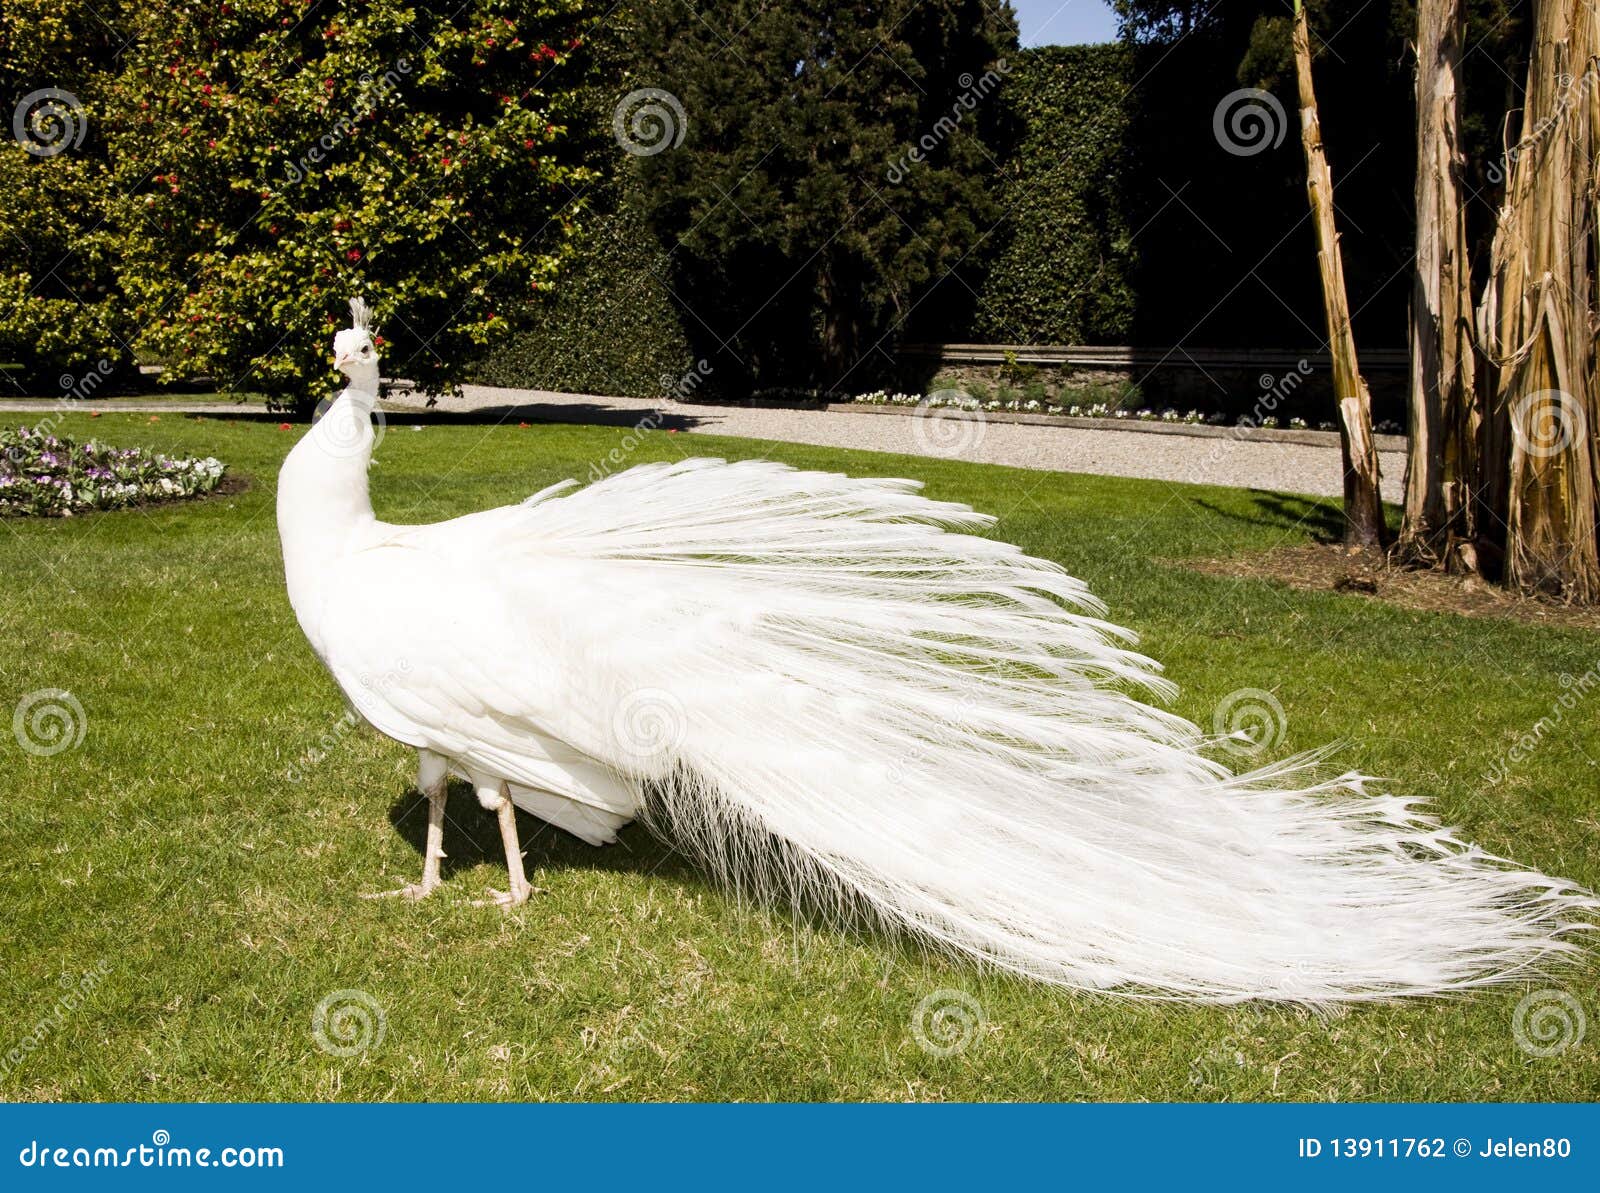 White peacock stock photo. Image of garden, fetahers - 13911762